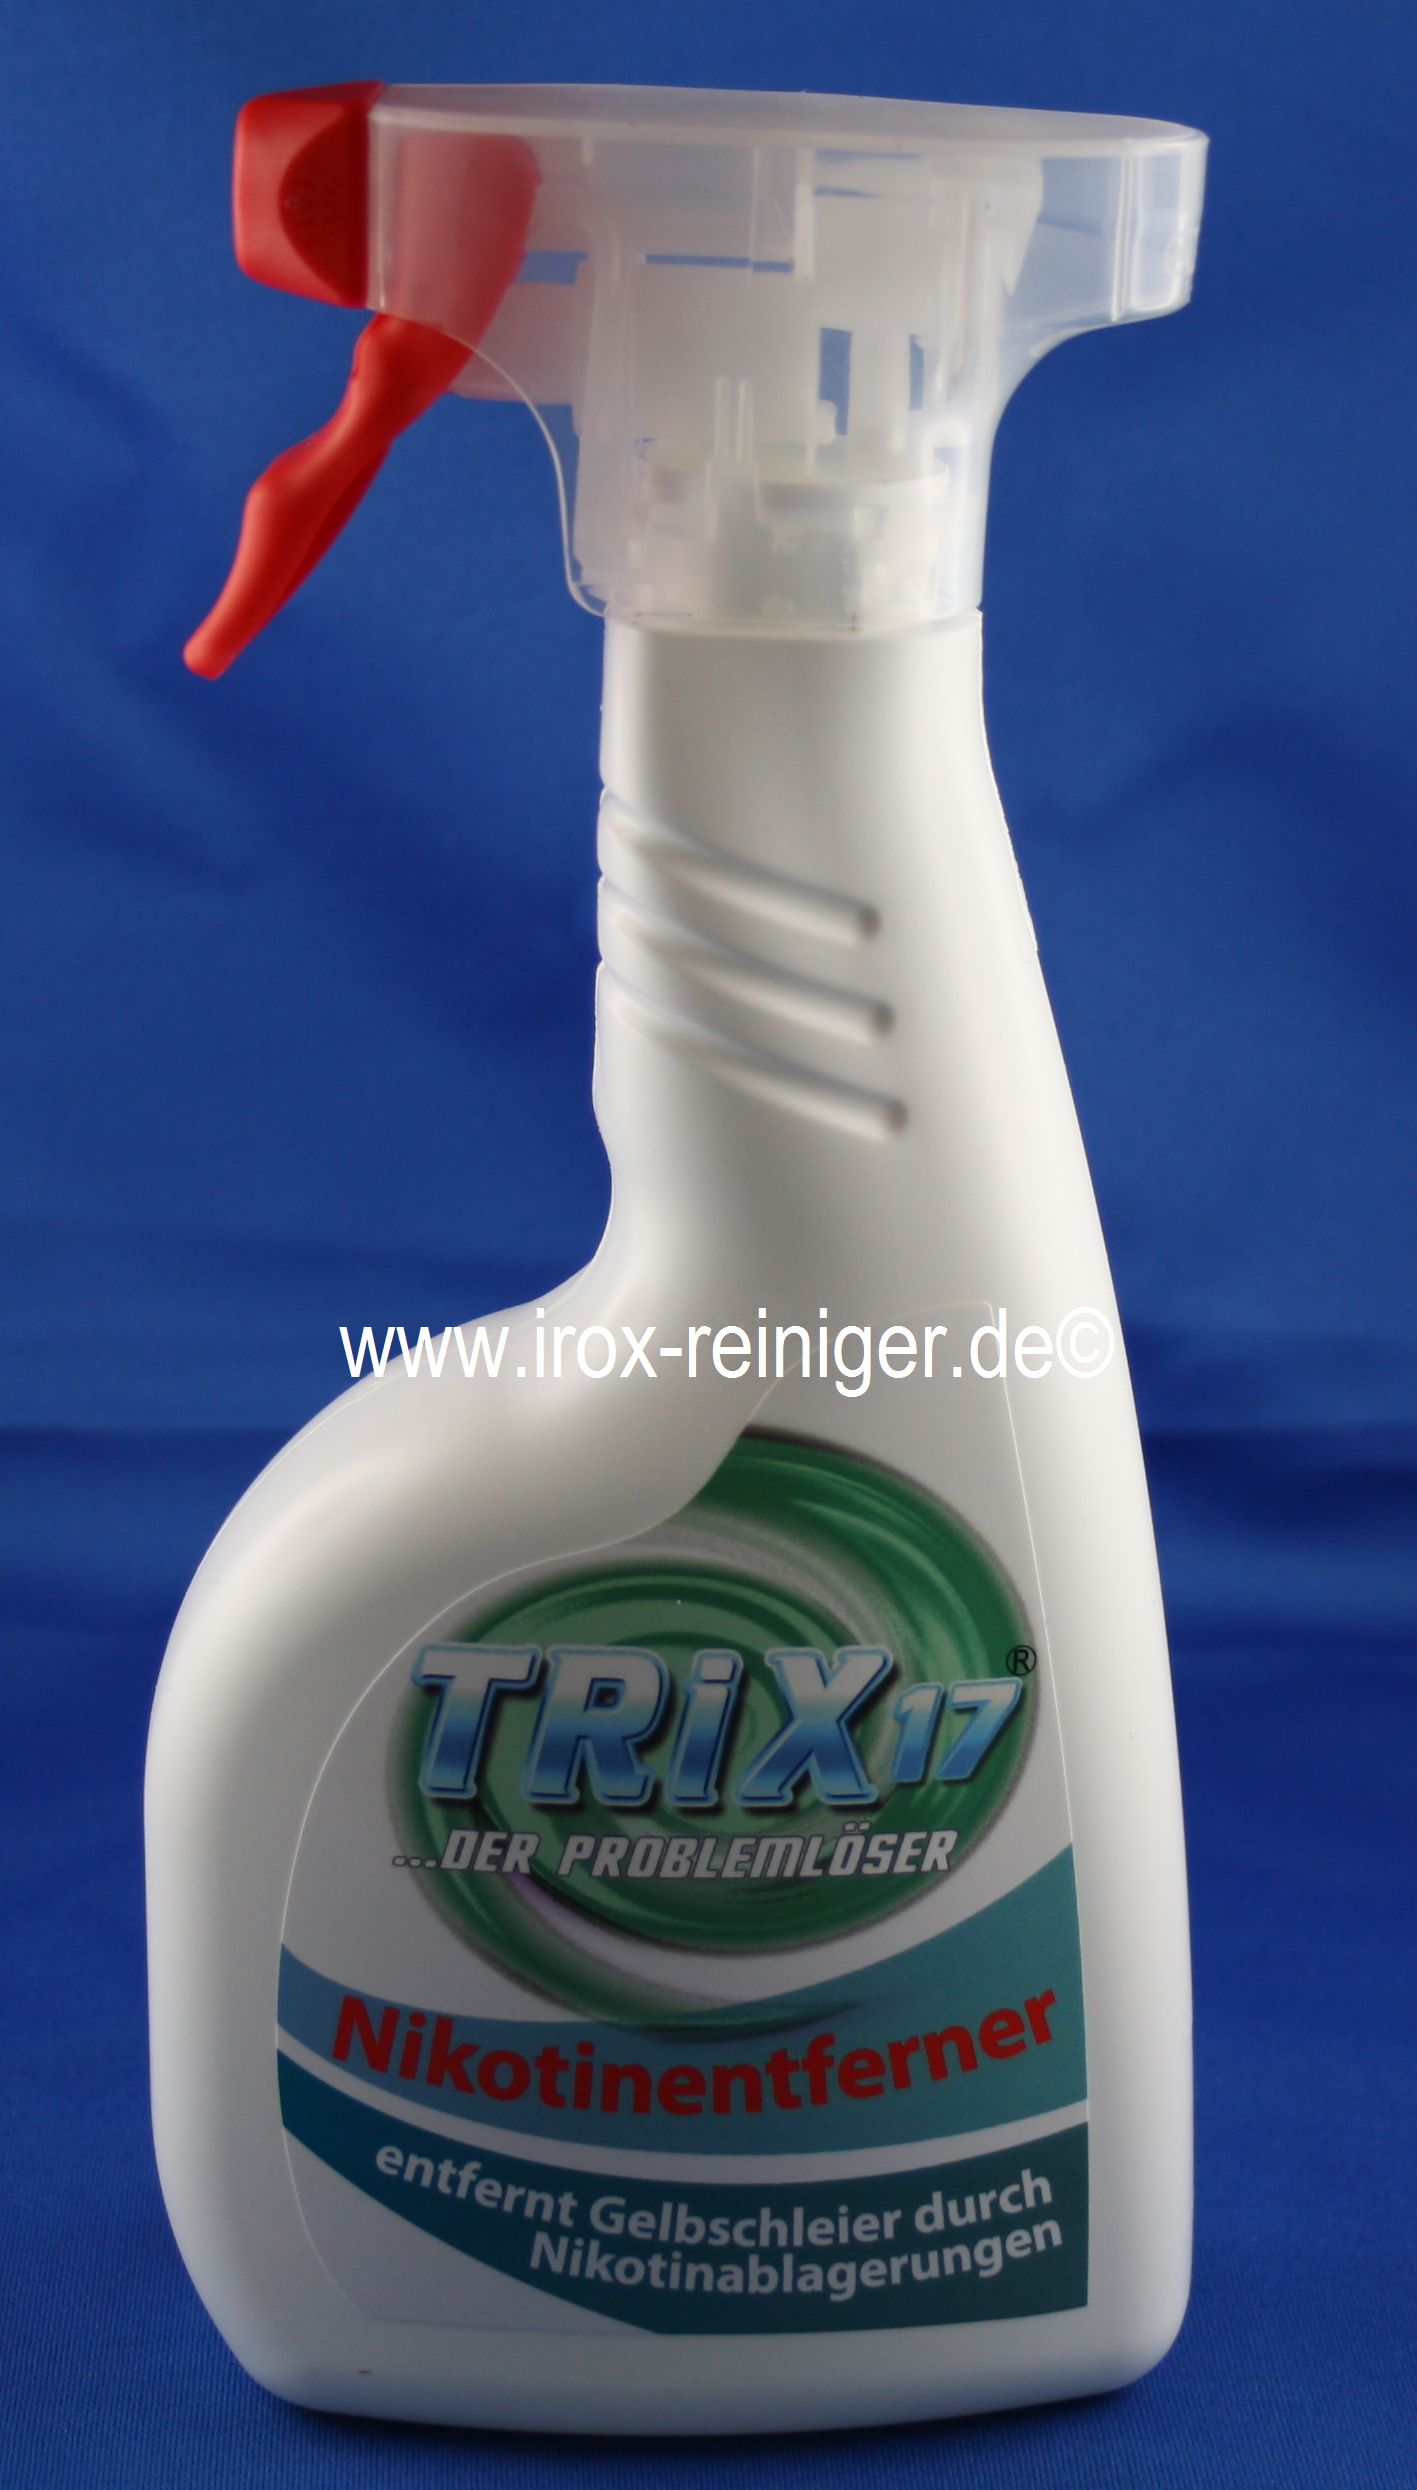 Irox-Reiniger Onlineshop - TRIX 17 Nikotin-Entferner 500ml, Nikotin,  Entfernung, Kunststoff, Oberflächen